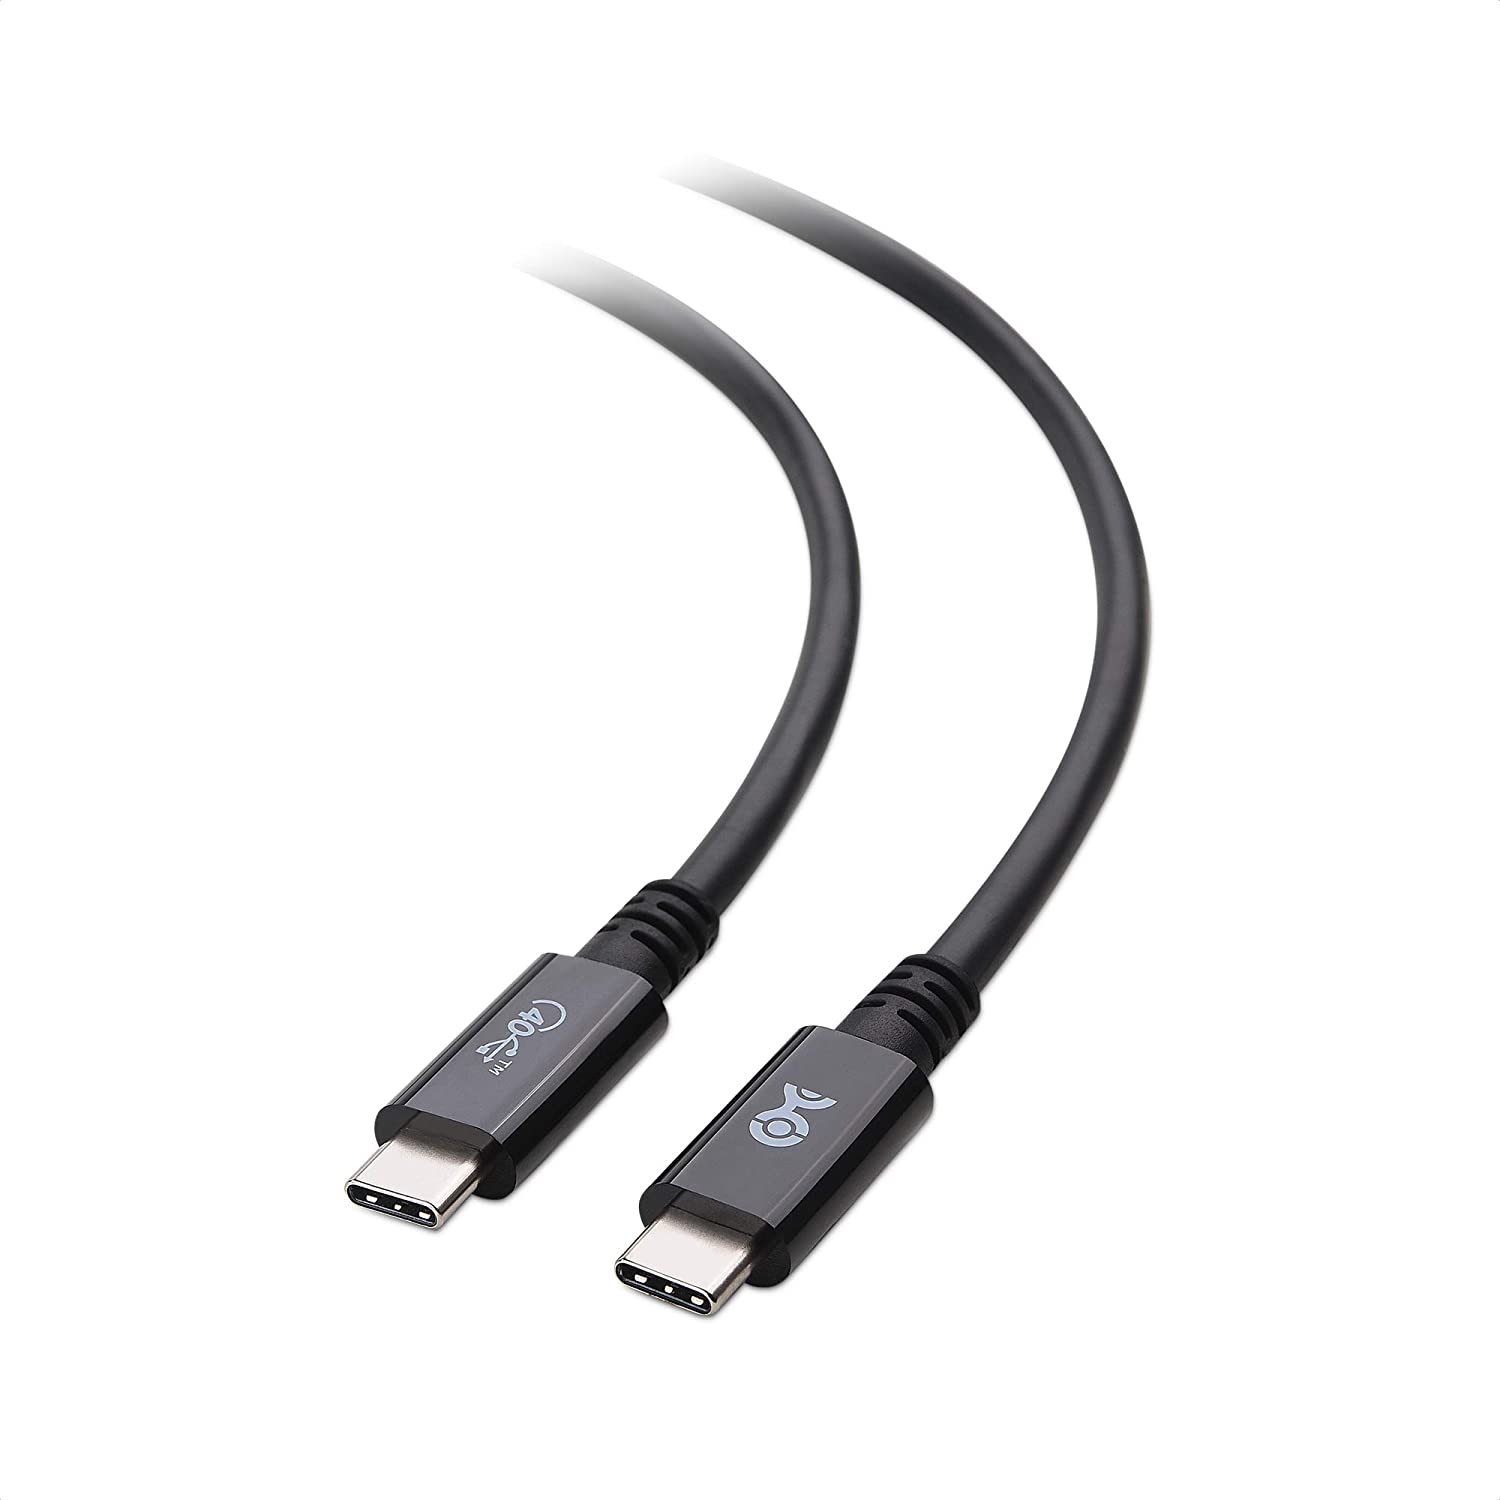 Cable Matters USB C-kabel van 6 meter